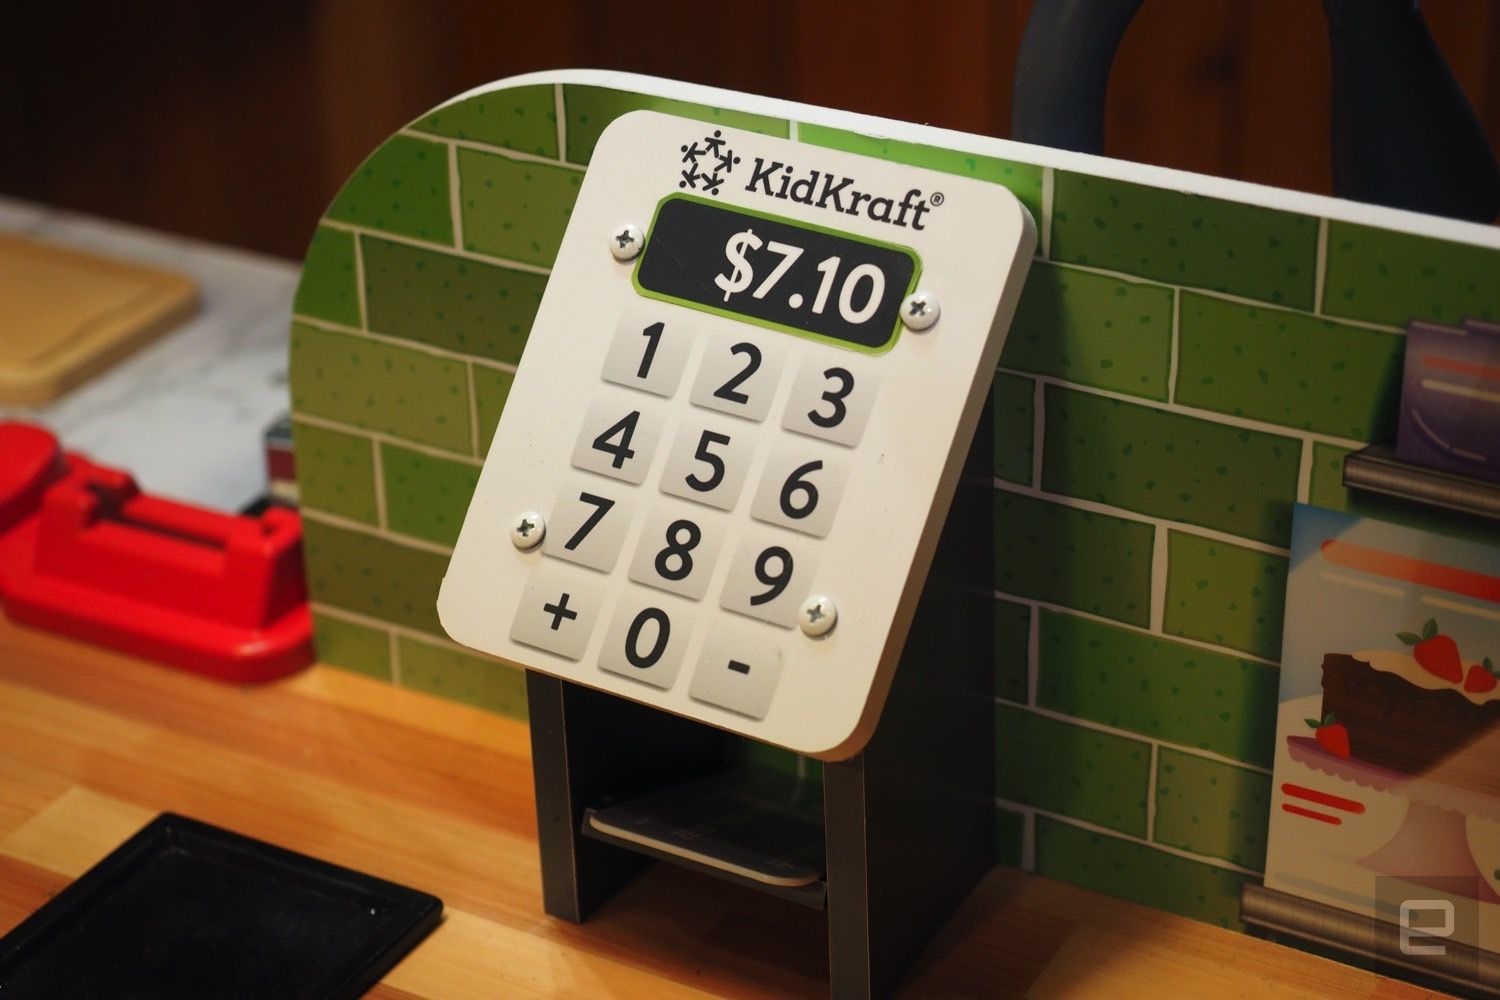 KidKraft's Alexa-powered toy kitchen sizzles and tells dad jokes | DeviceDaily.com